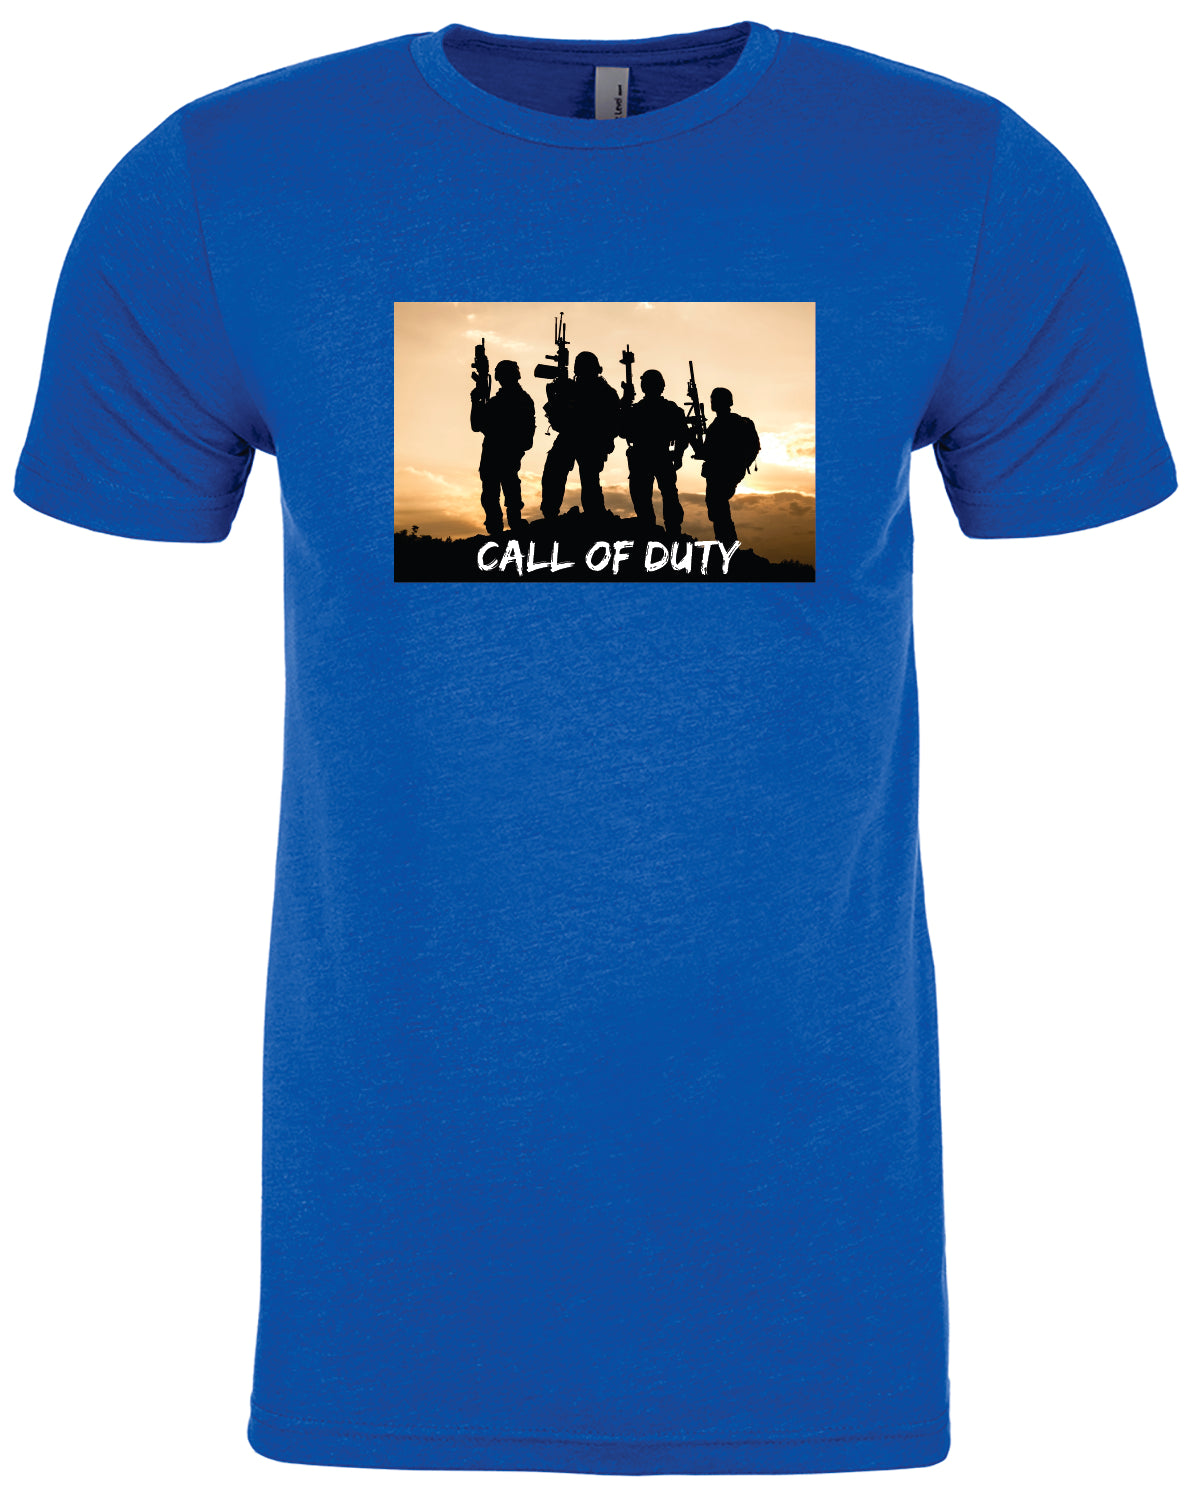 Call of Duty T-shirt